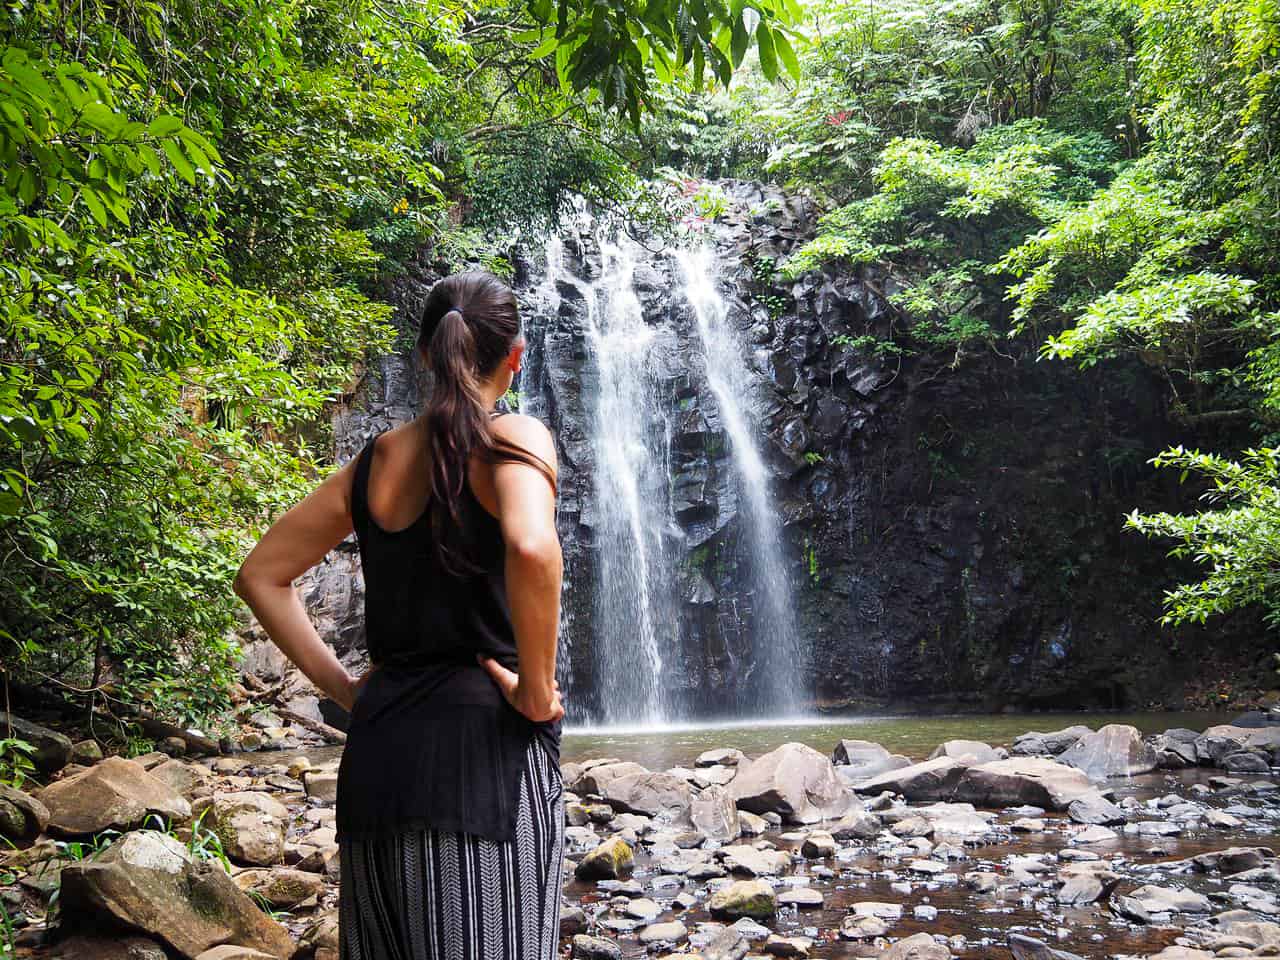 Ellinjaa Falls near Cairns, North Queensland, Australia // travelmermaid.com